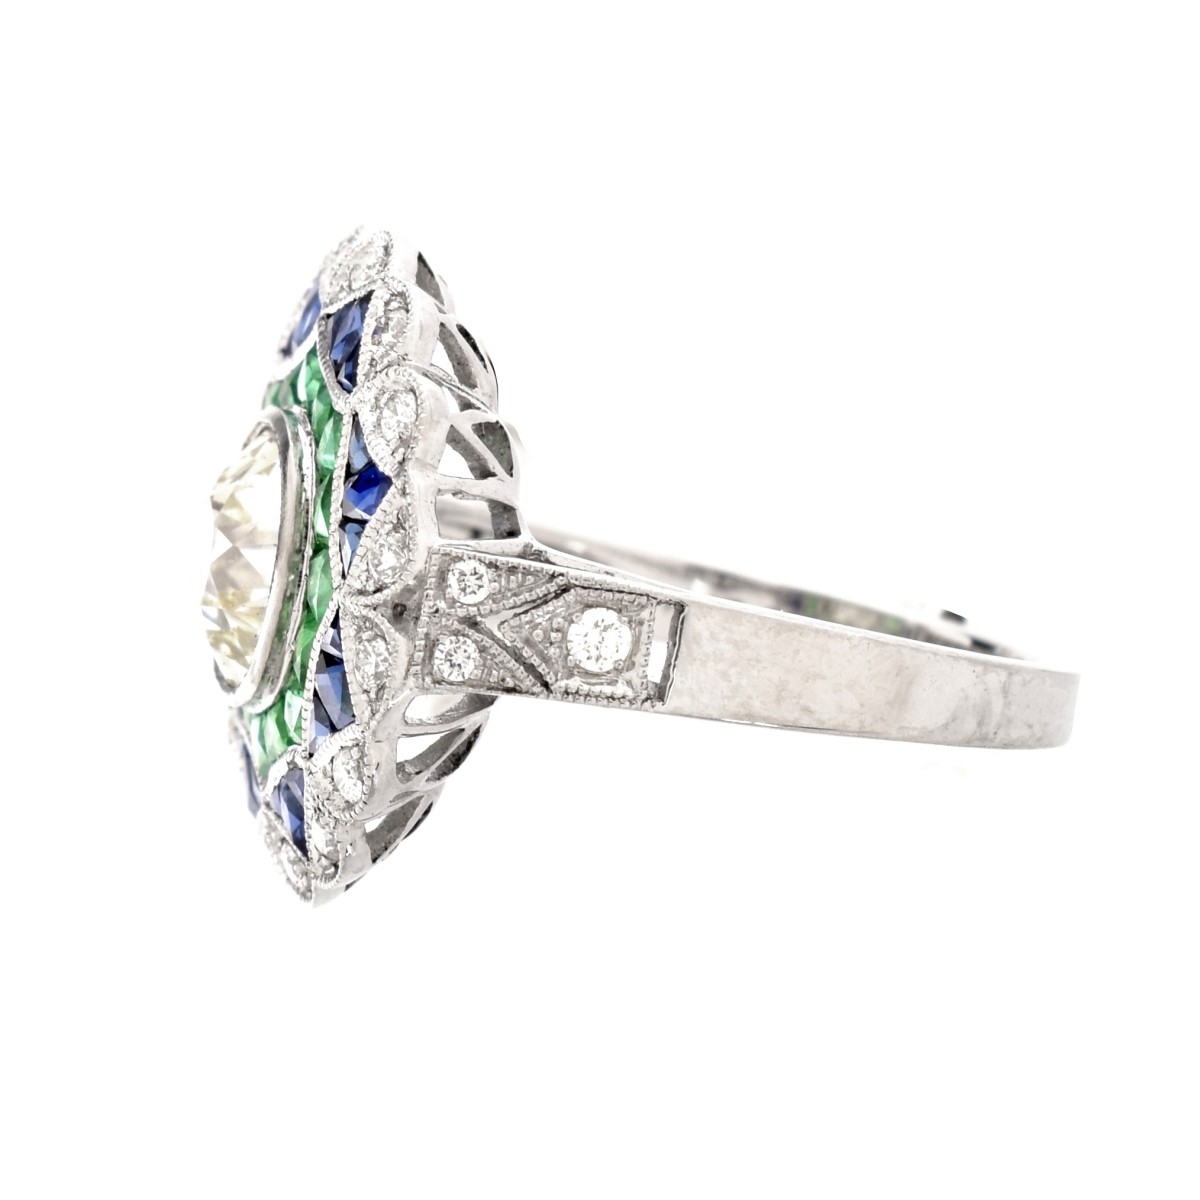 Diamond, Sapphire, Emerald and Platinum Ring